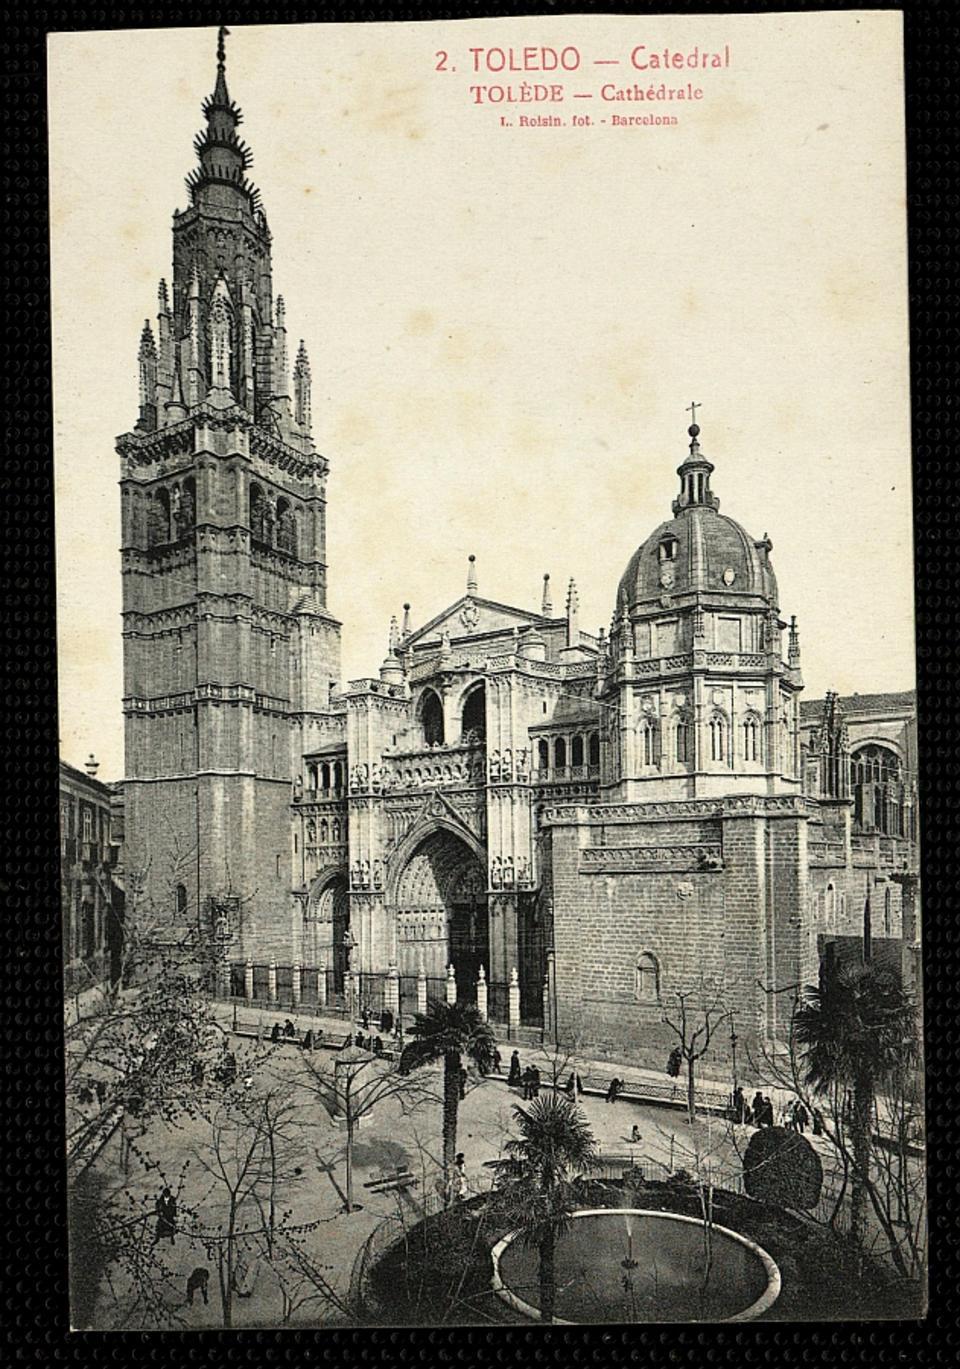 Toledo : Catedral / L. Roisin, fot.-. [Imagen]